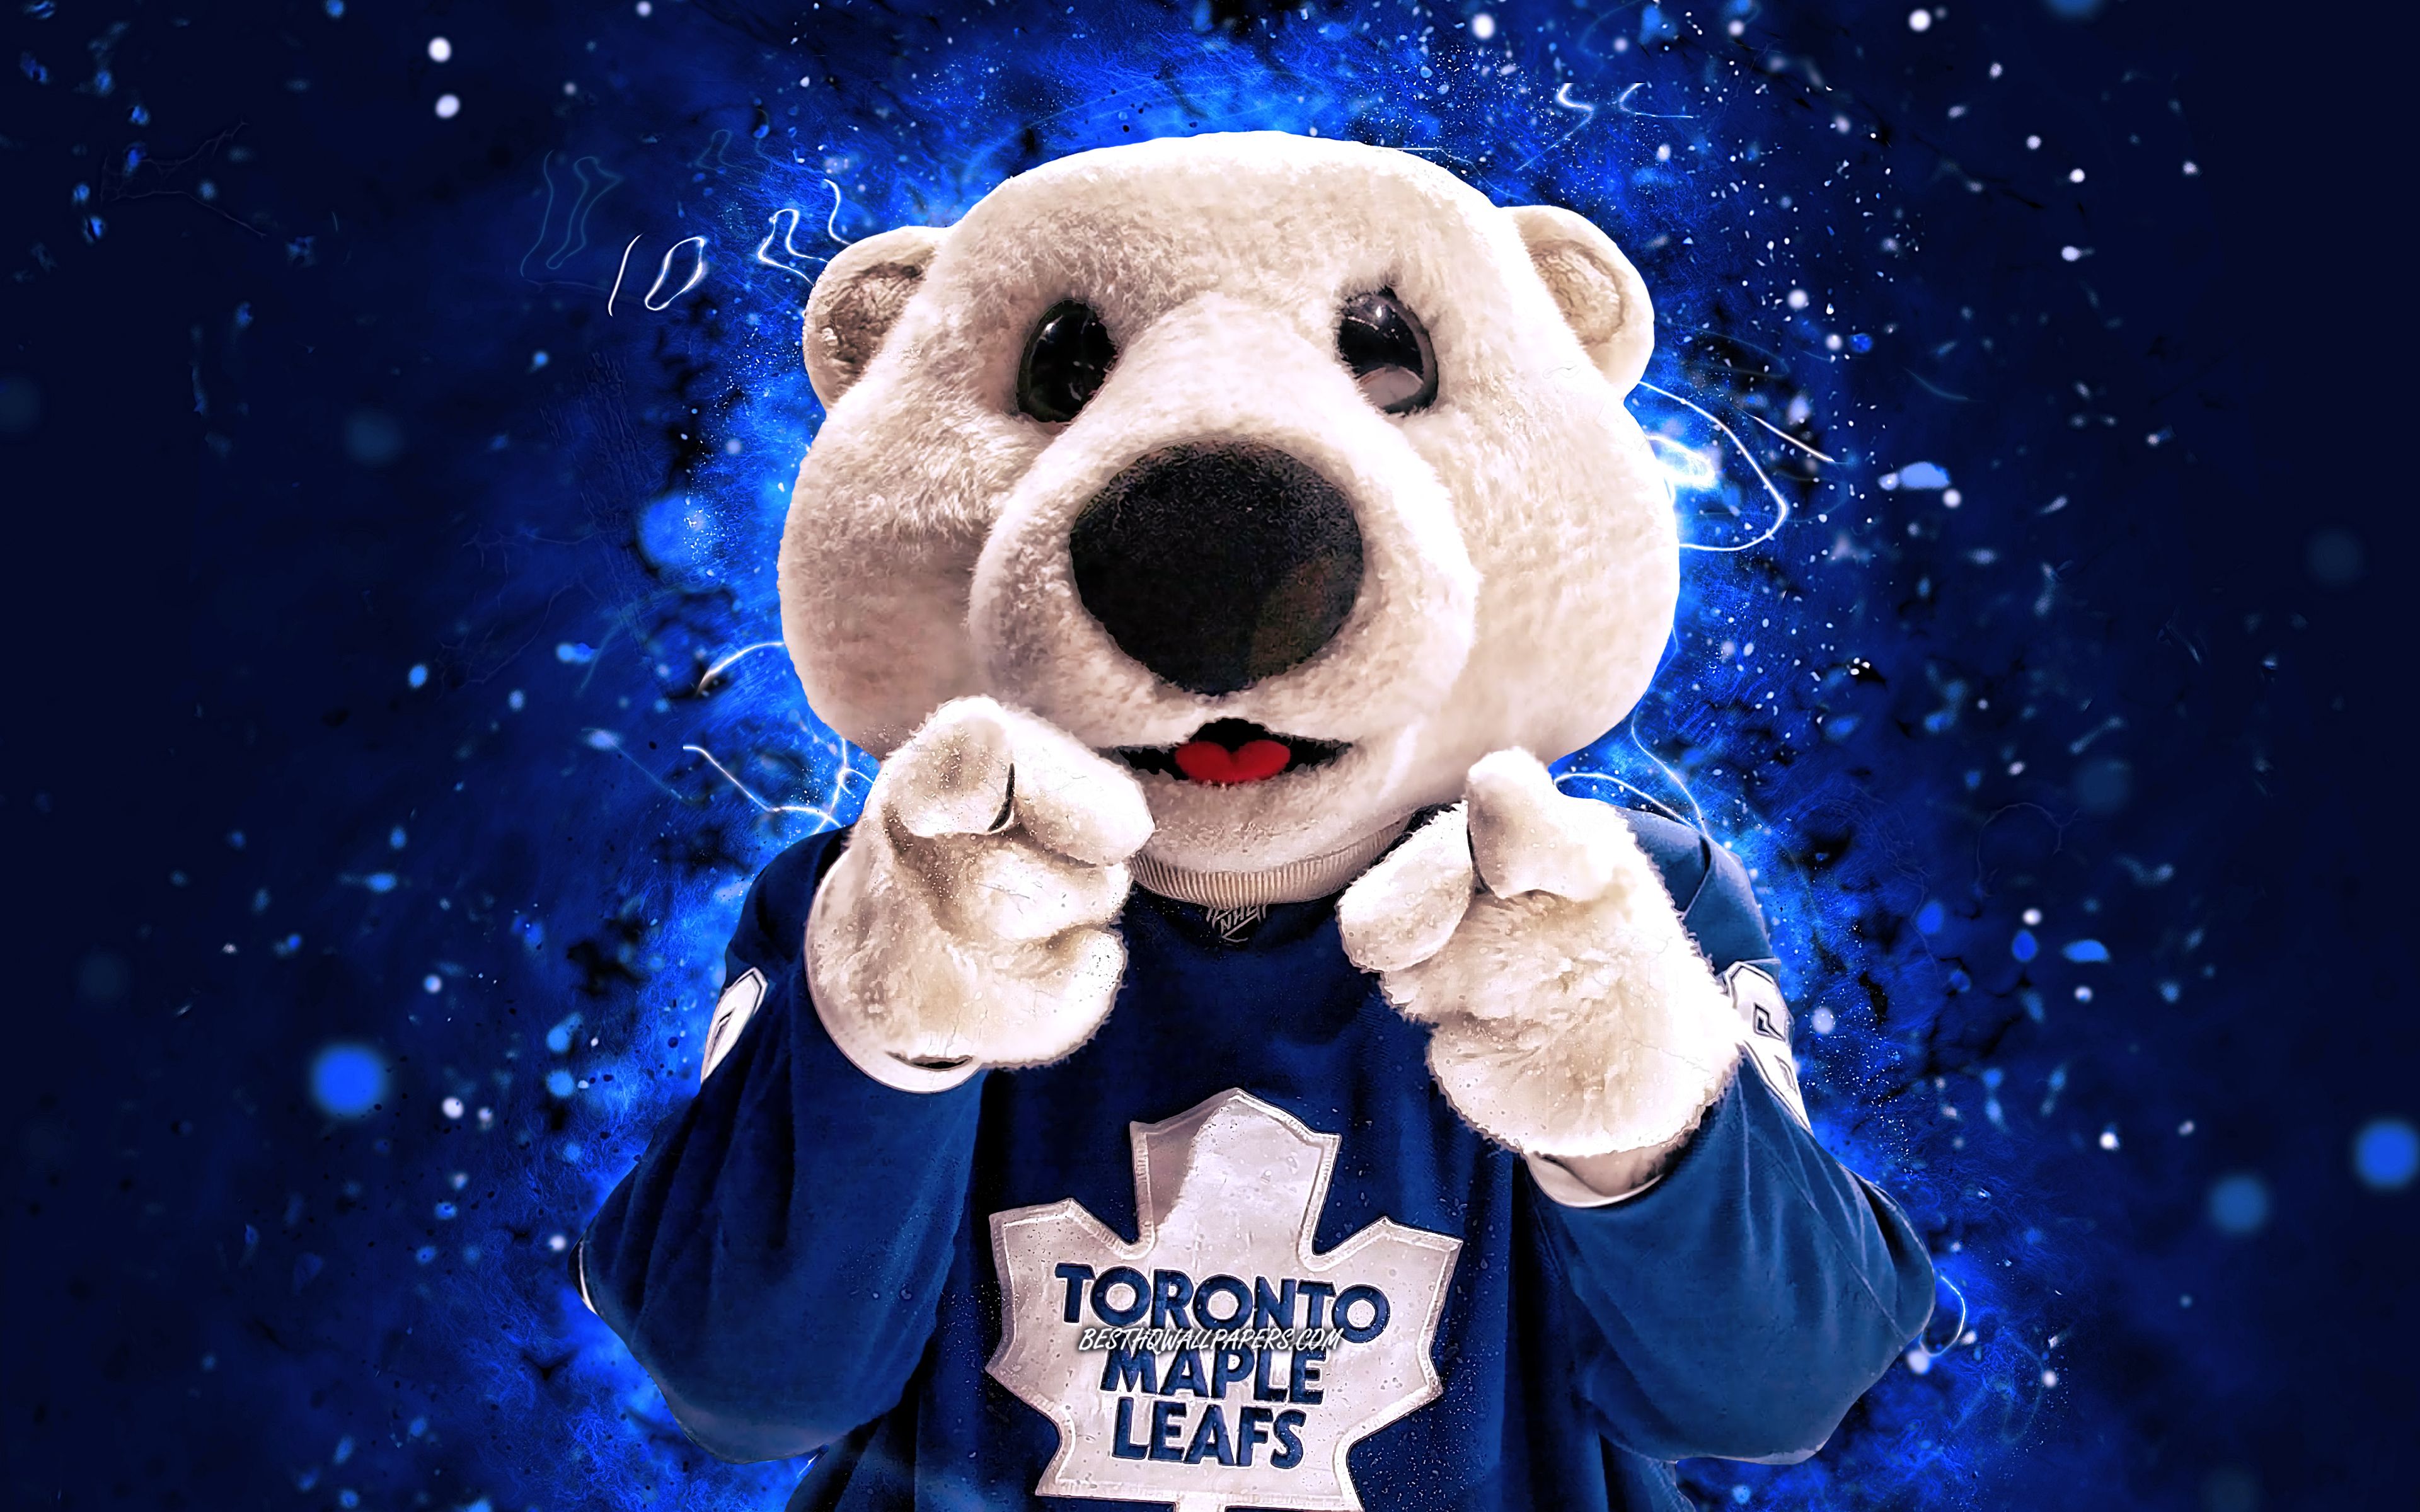 Download wallpaper Carlton the Bear, 4k, mascot, Toronto Maple Leafs, blue neon lights, NHL, creative, USA, Toronto Maple Leafs mascot, Carlton, NHL mascots, official mascot, Carlton mascot for desktop with resolution 3840x2400